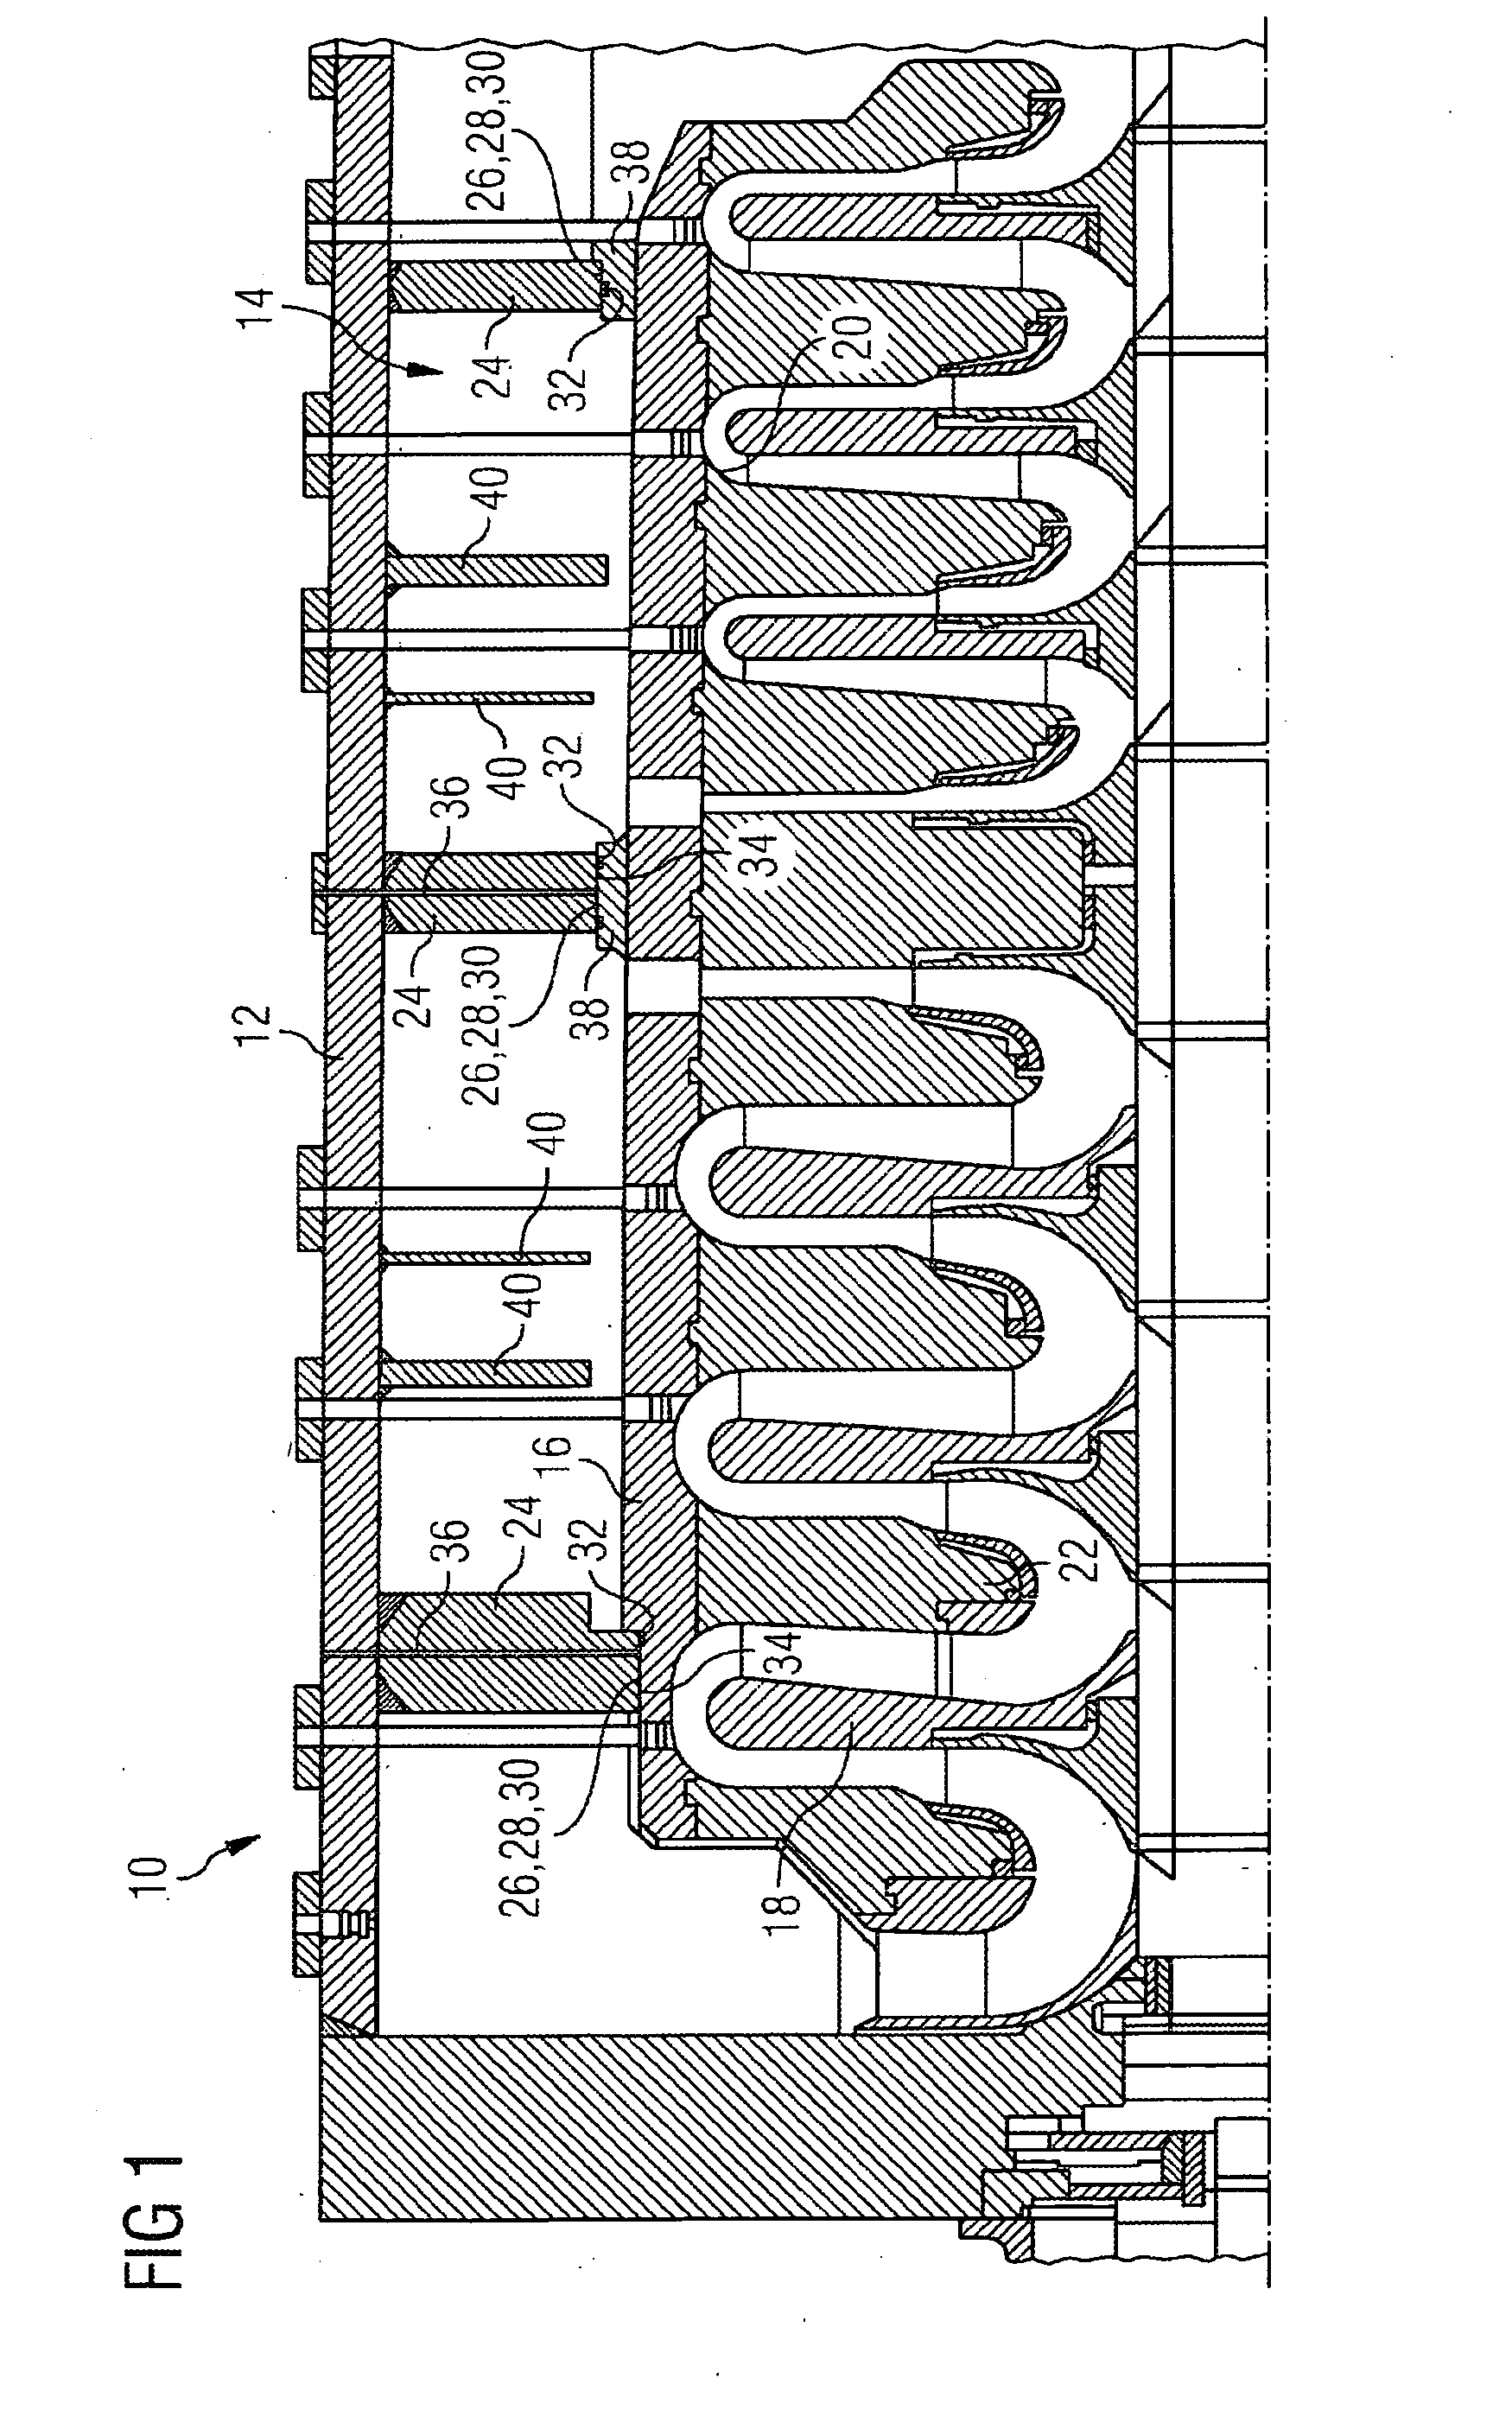 Multistage Turbocompressor